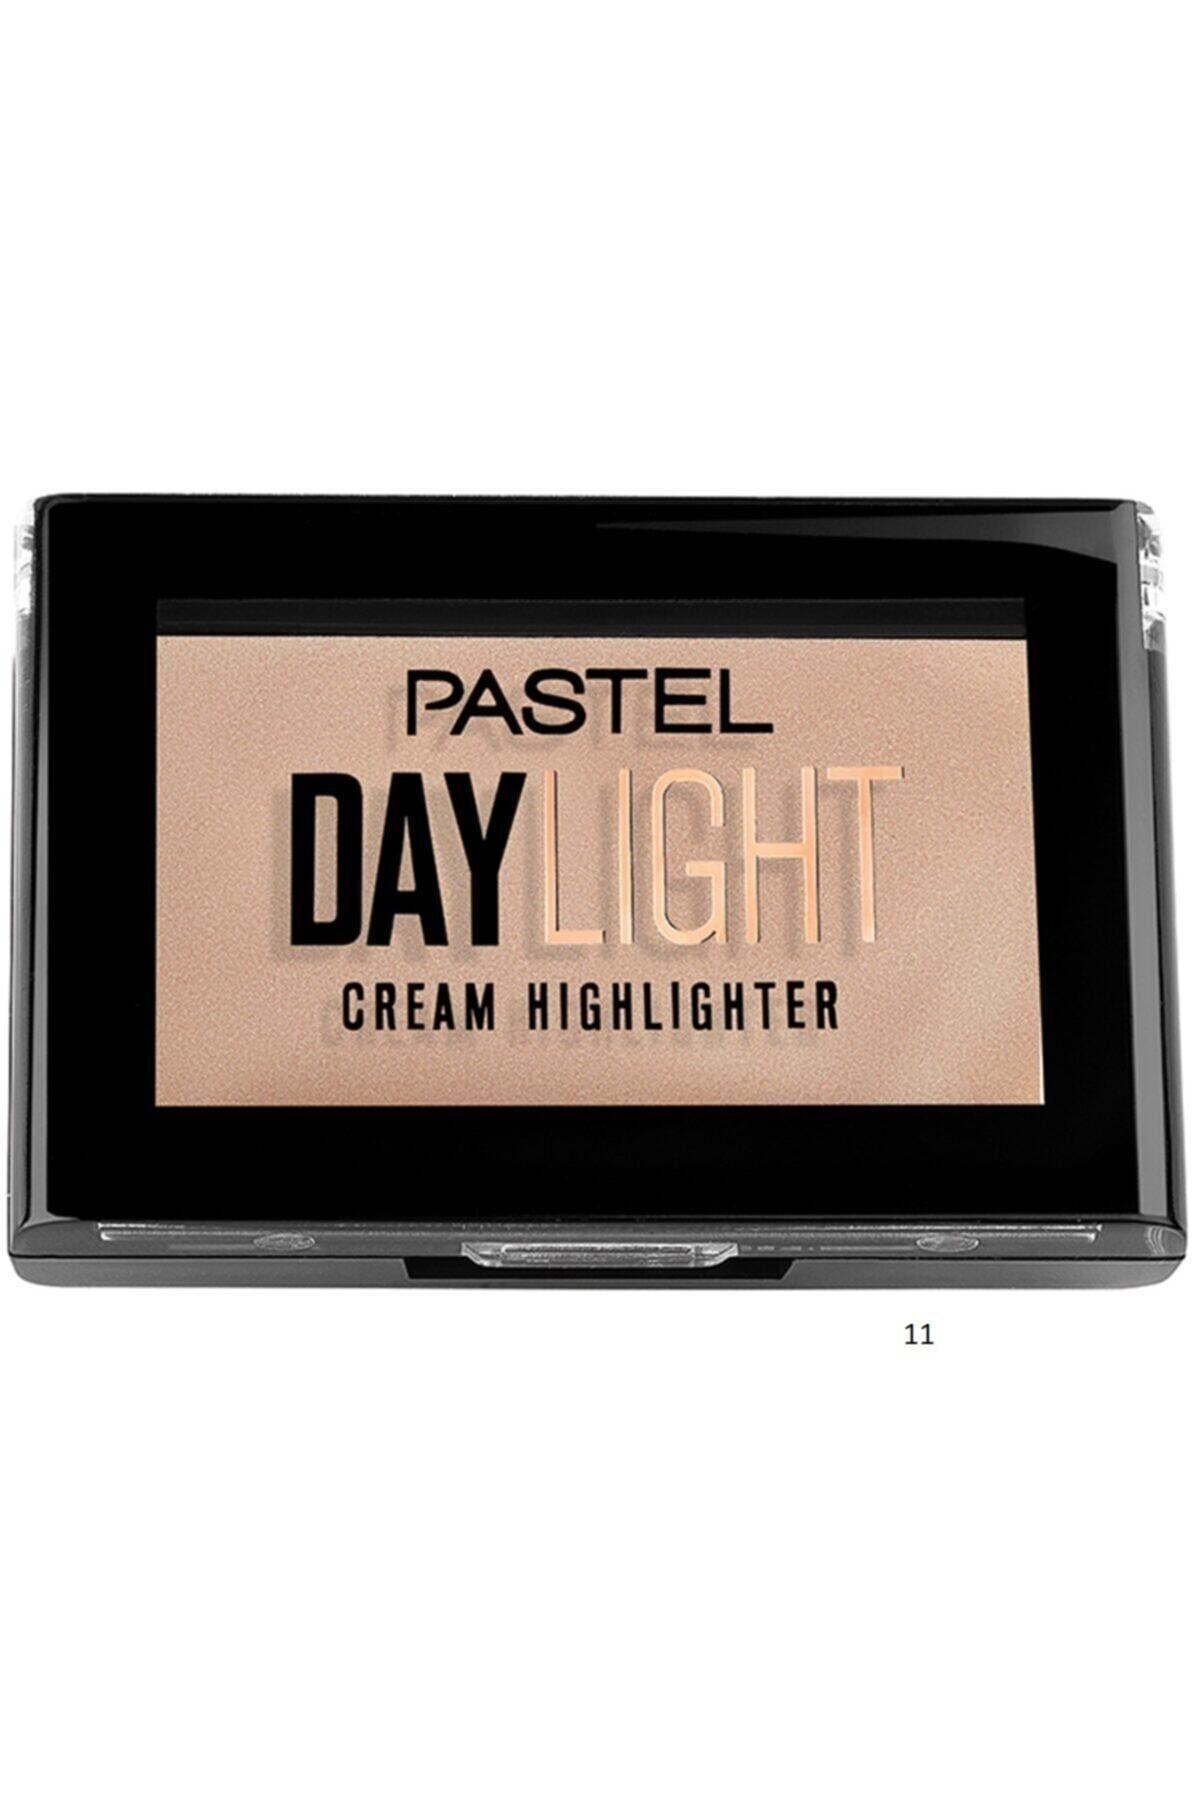 Pastel Profashion Daylight Cream Highlighter N 11